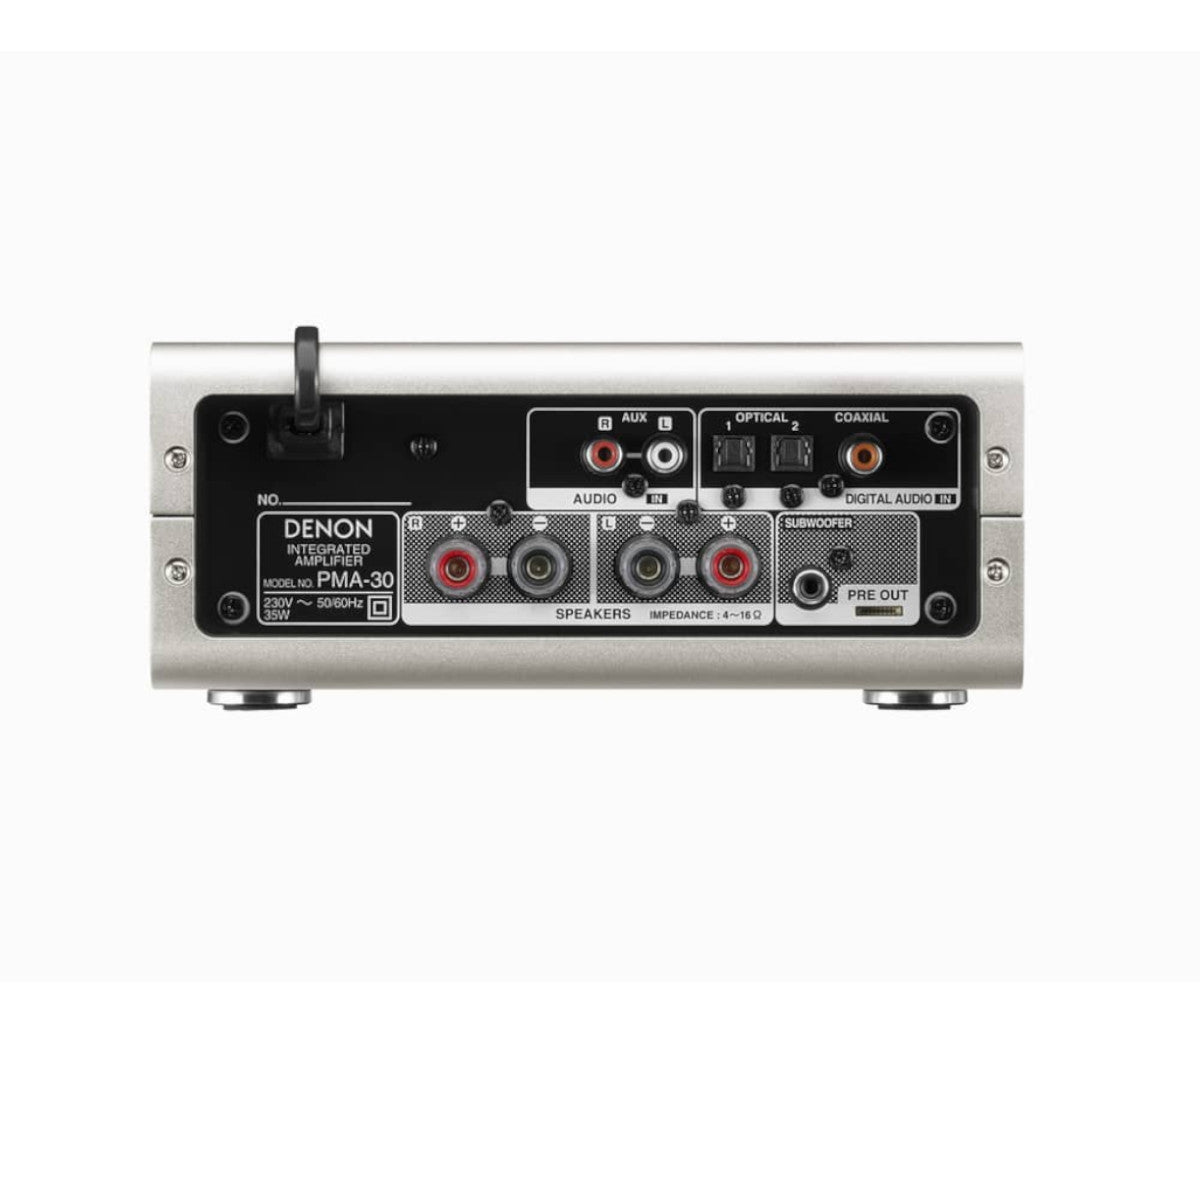 Denon PMA-30 Compact Digital Integrated Stereo Amplifier